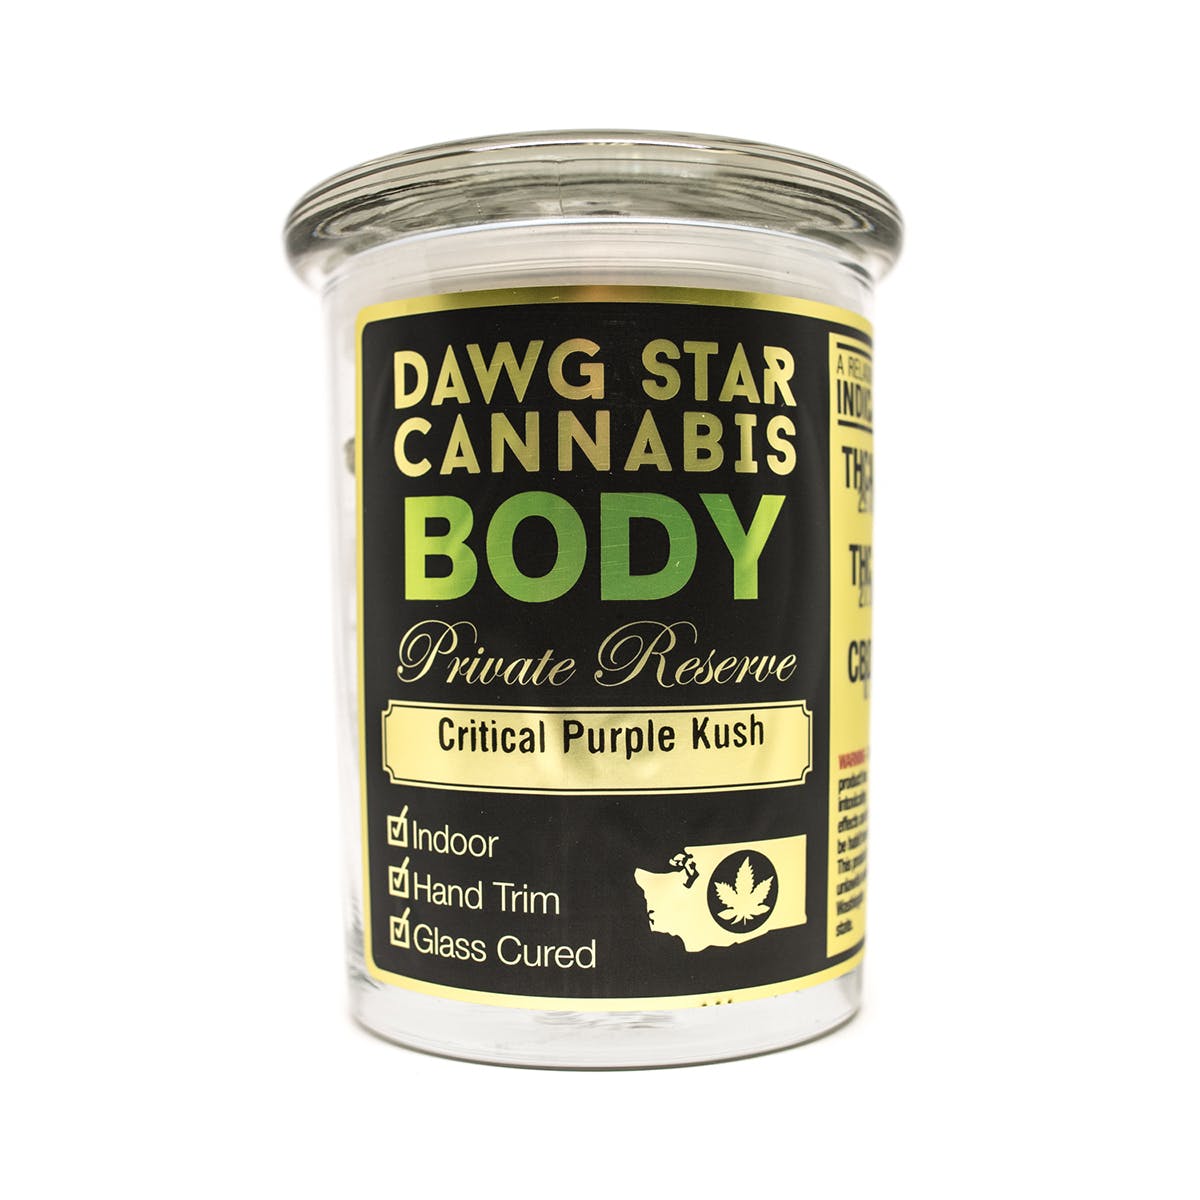 indica-dawg-star-cannabis-critical-purple-kush-private-reserve